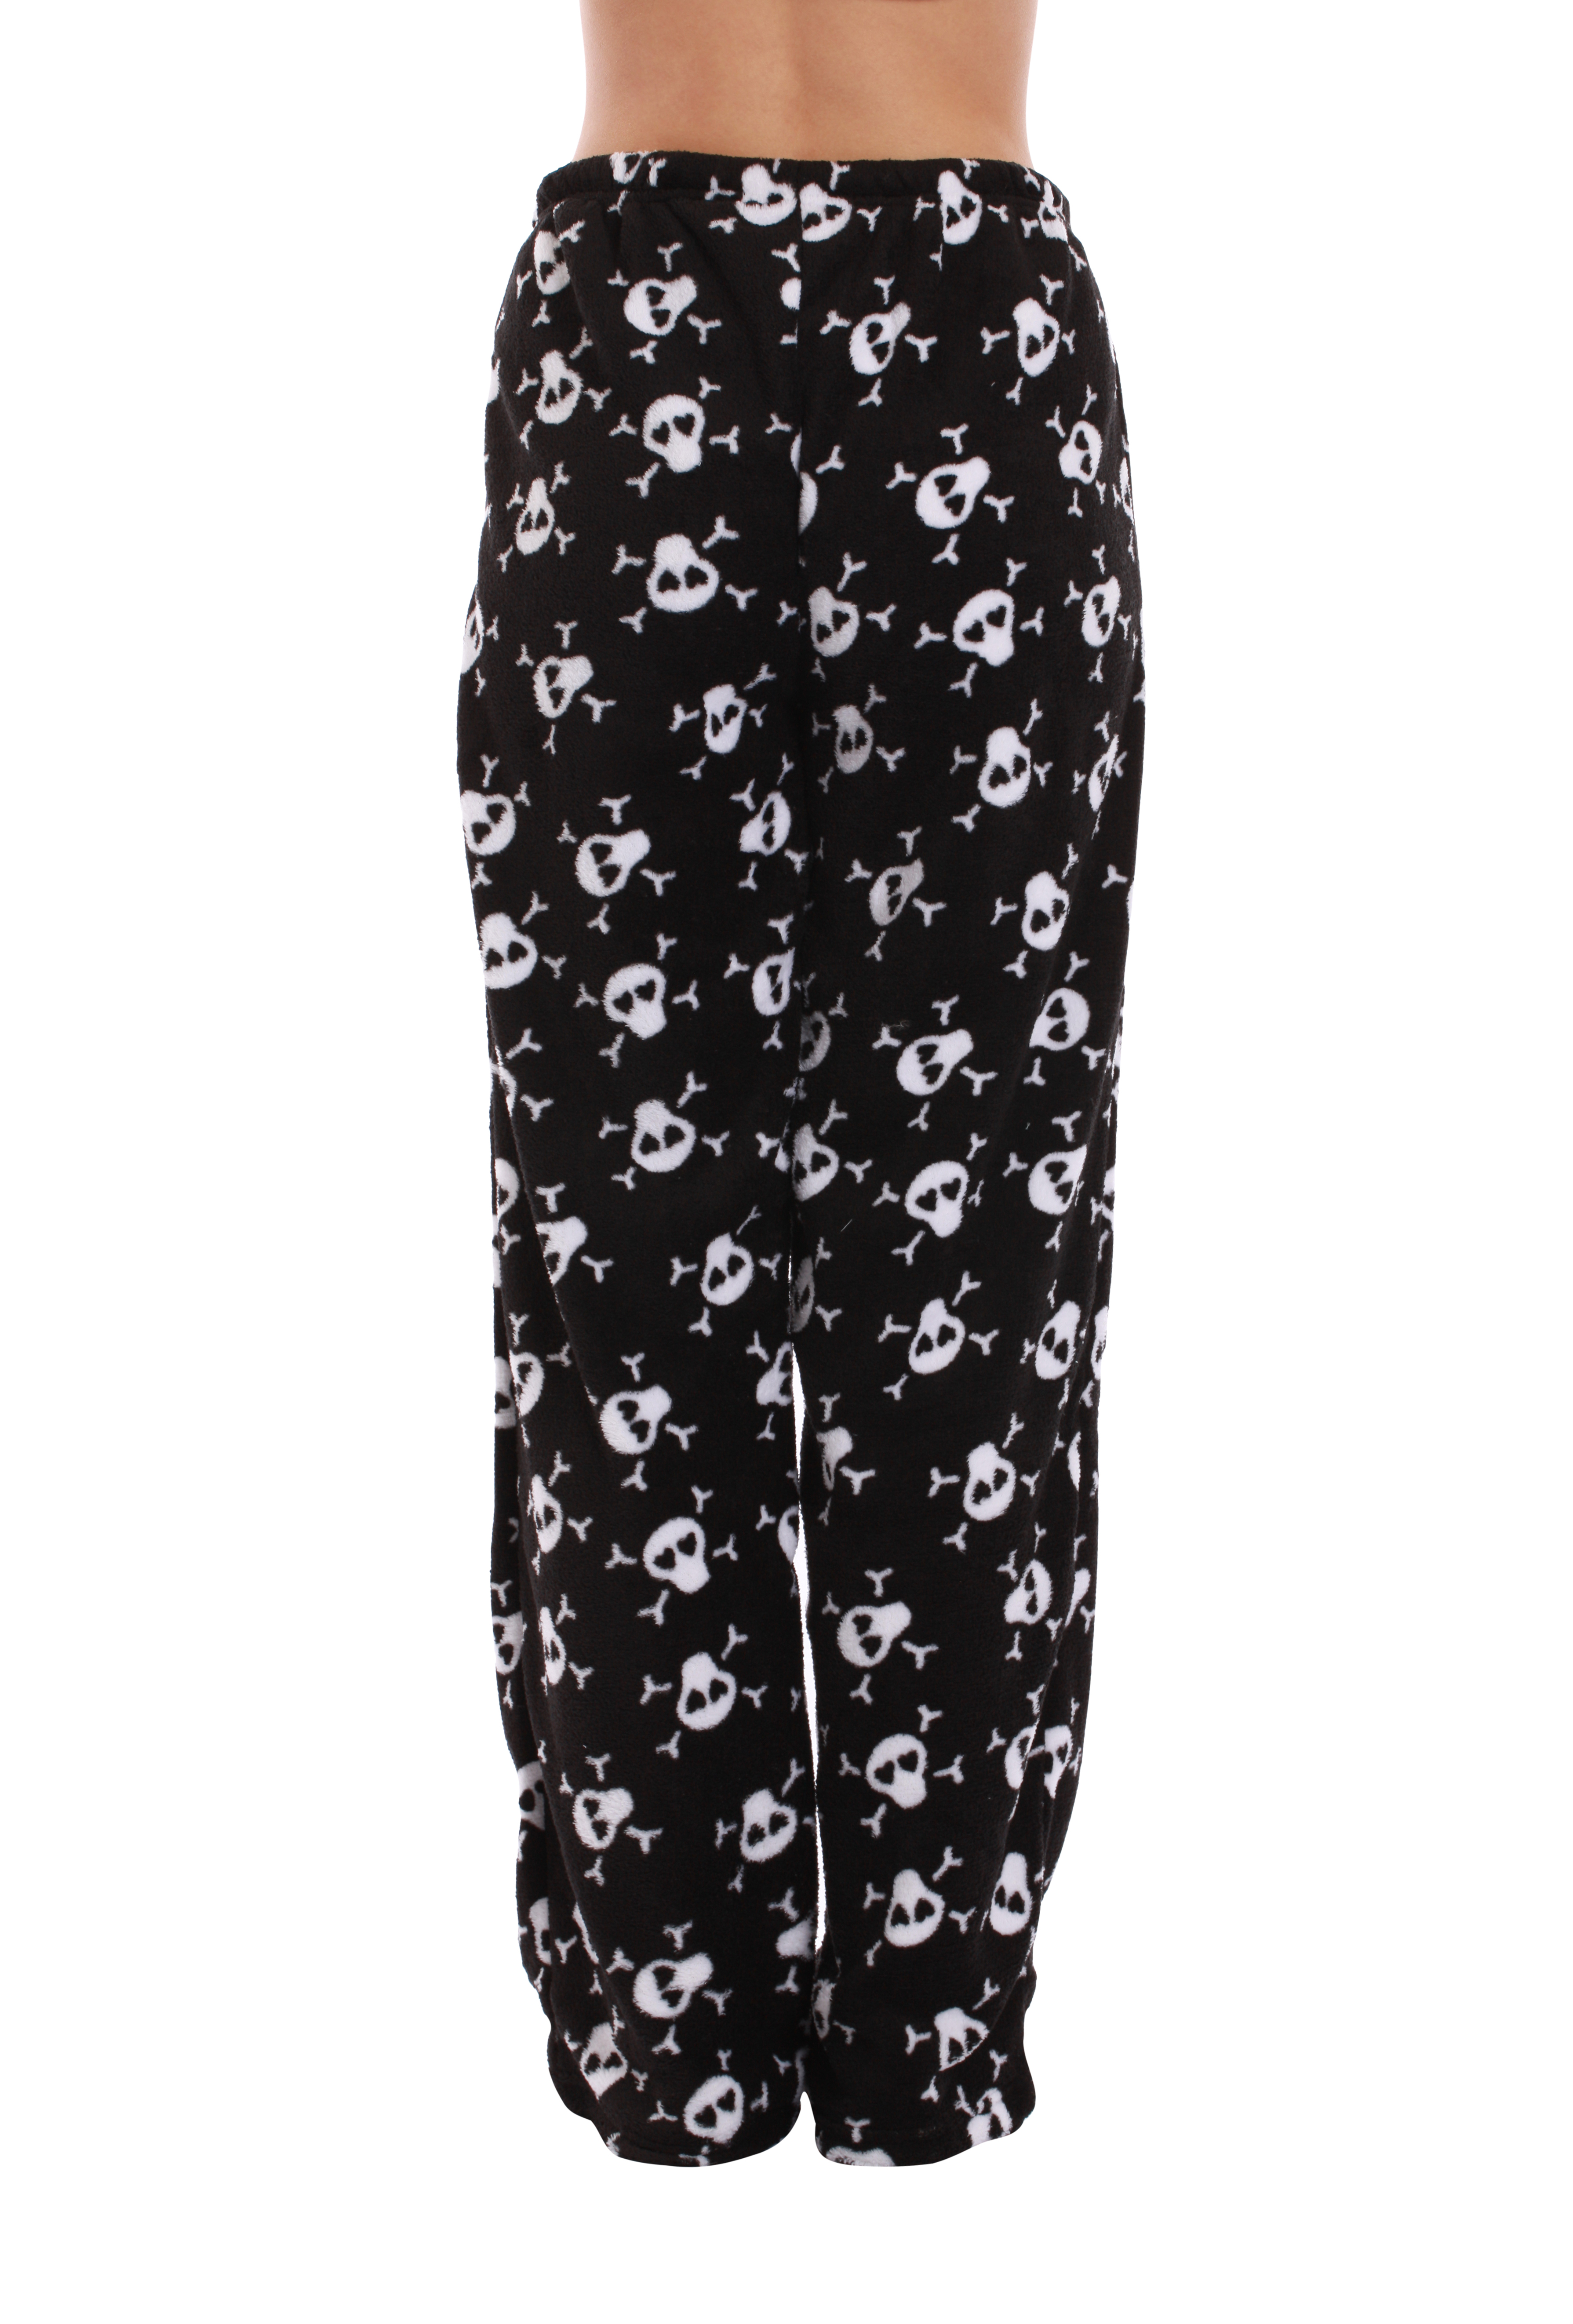 Just Love 100% cotton Jersey Knit Fun Print Women Pajama Pants Sleepwear,  cupcake White, 2X Plus 